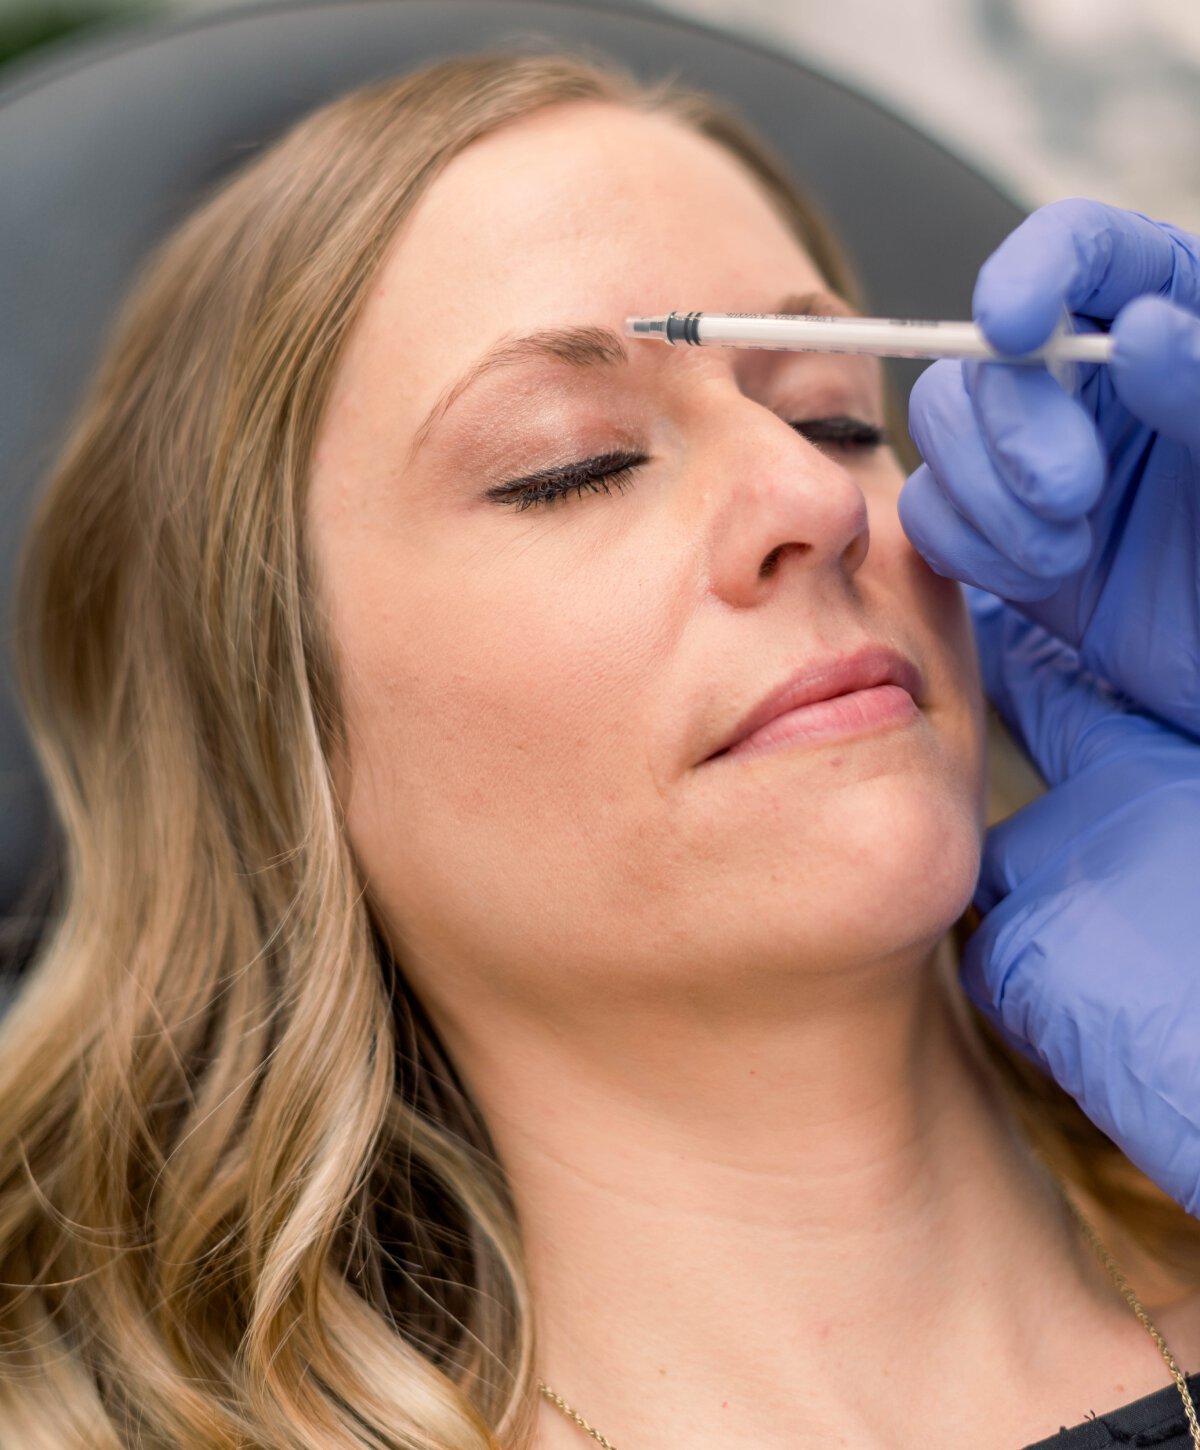 Carmel dermal fillers patient model receiving treatment at her brow